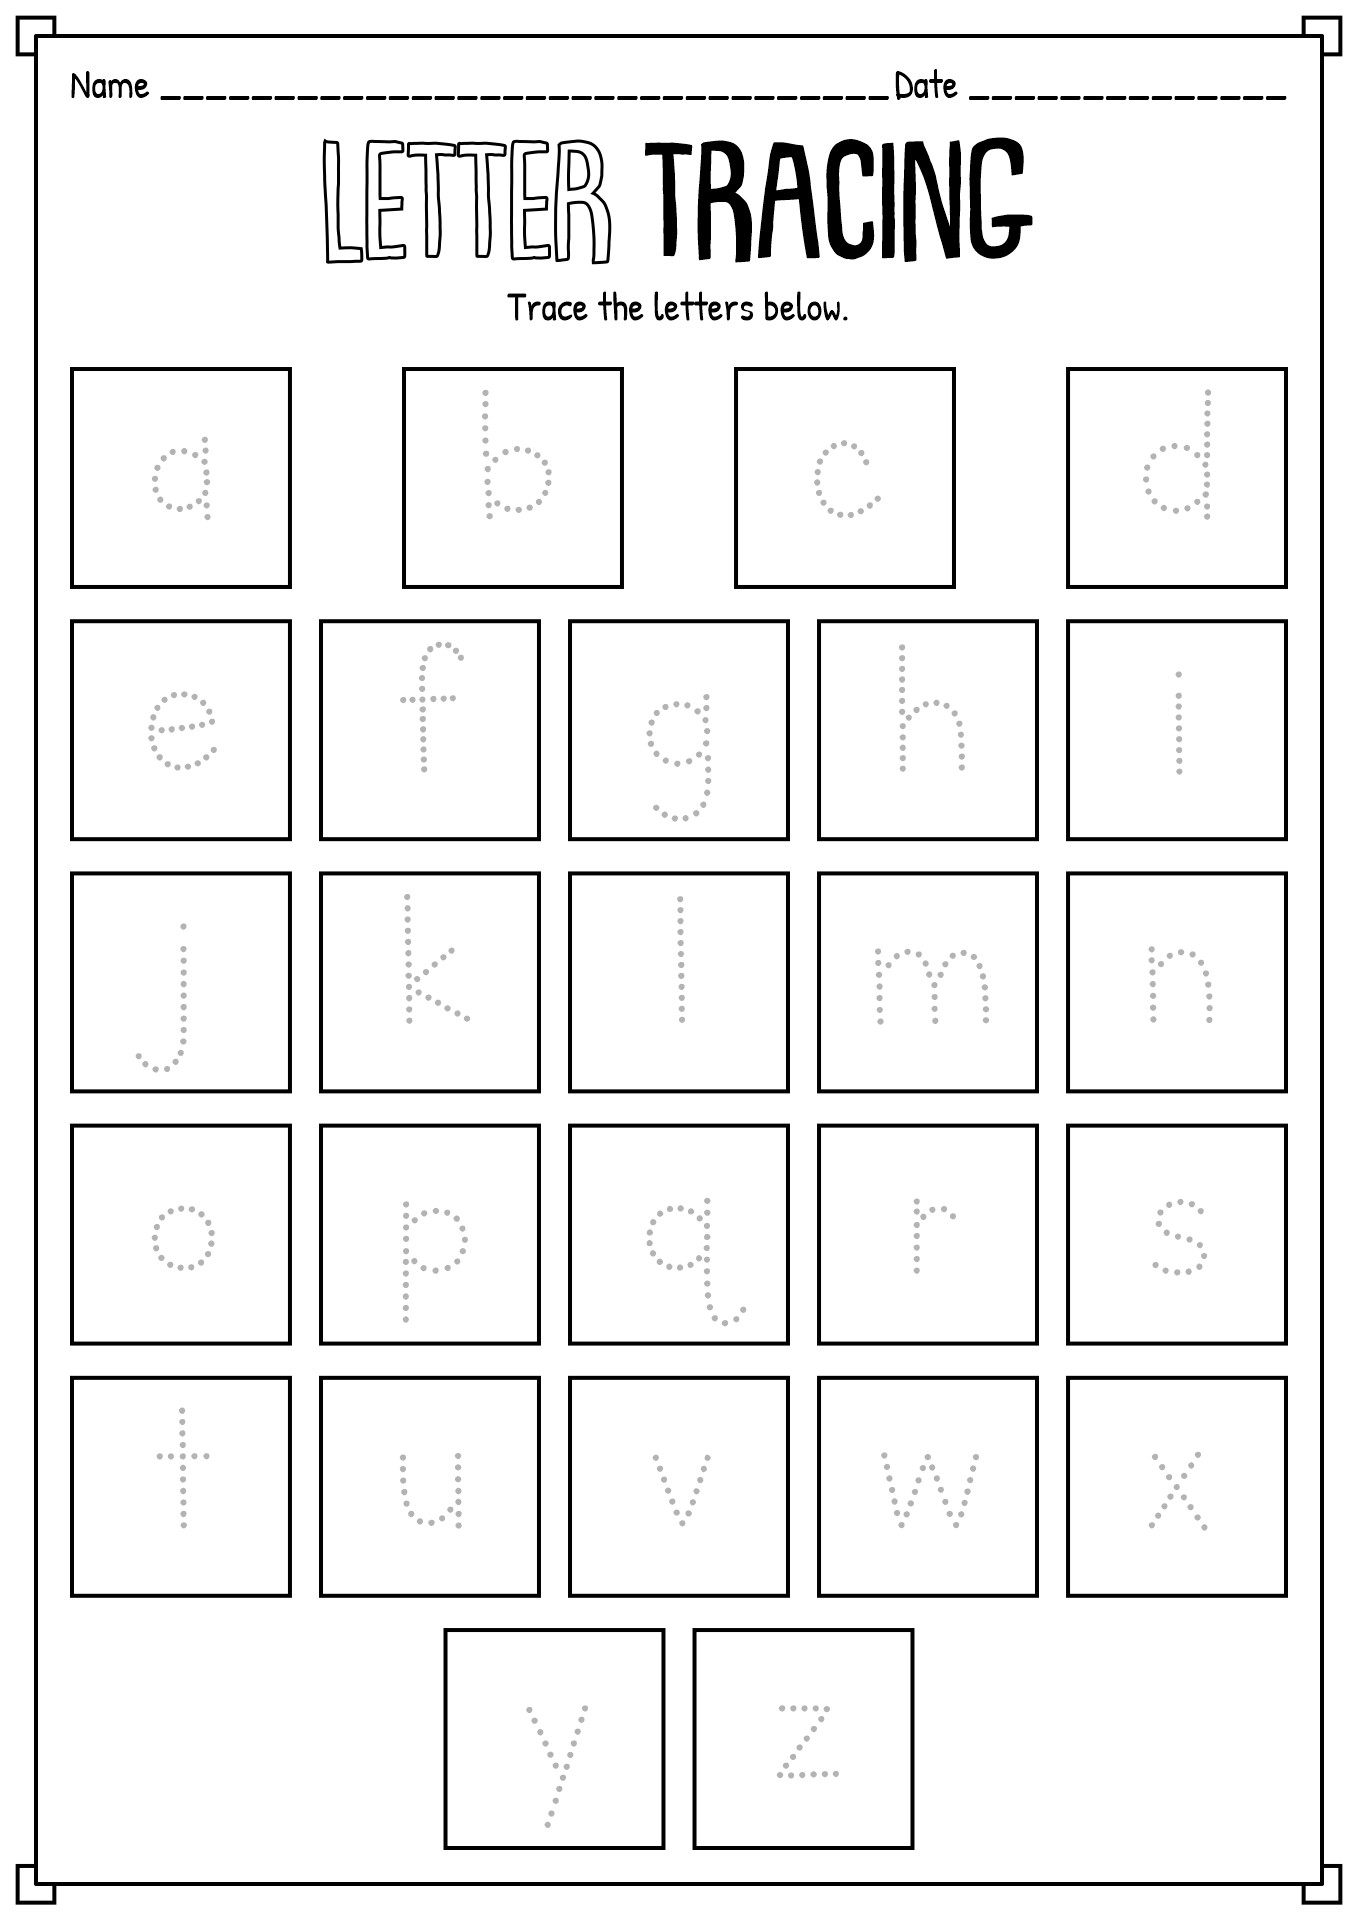 13 Best Images of CVC Word Families Worksheets - Kindergarten CVC Word ...